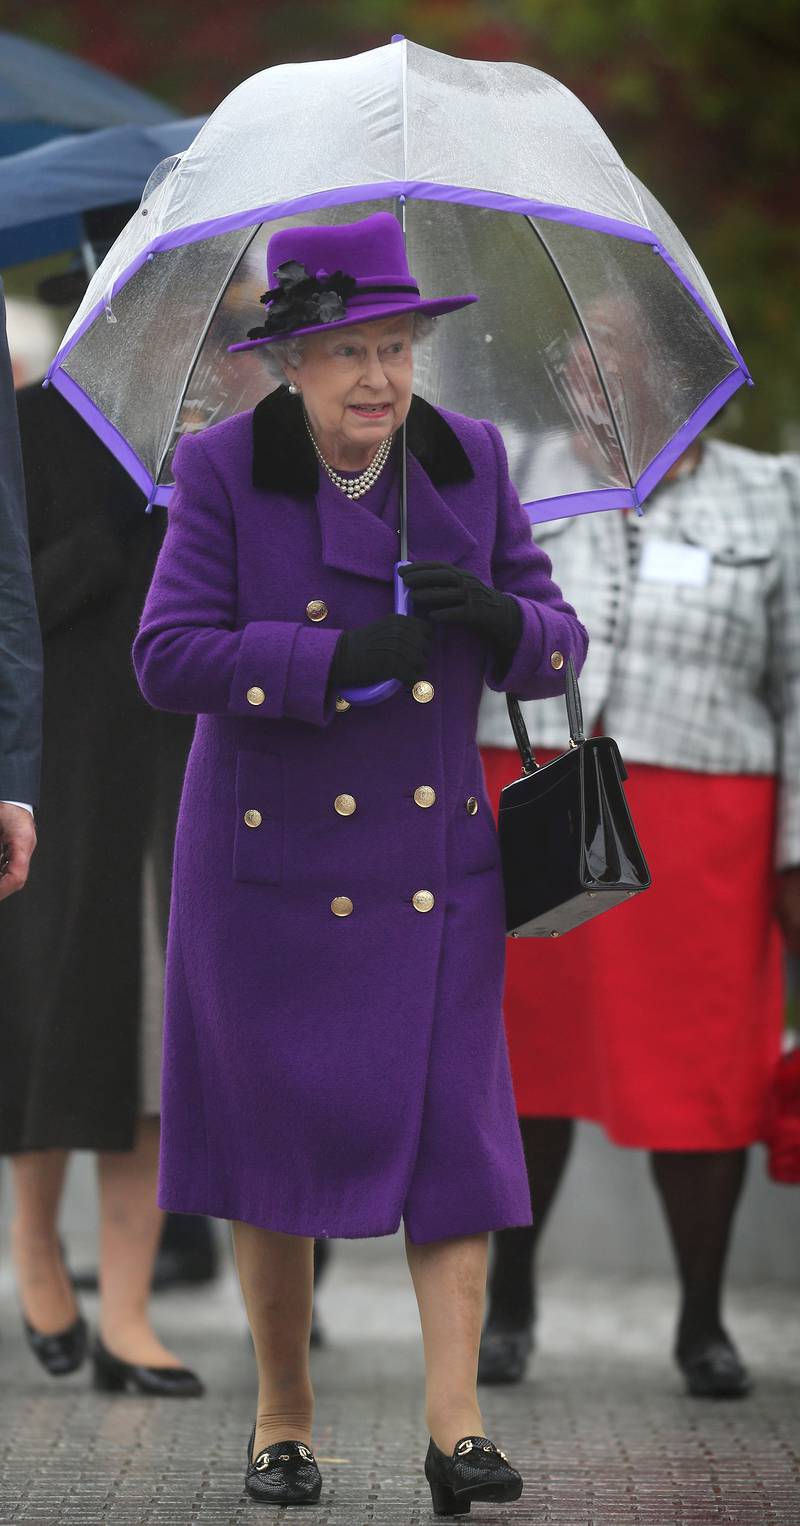 Queen Elizabeth II, wearing purple, attends the opening of the rebuilt Jubilee Gardens on October 25, 2012, in London. Getty Images